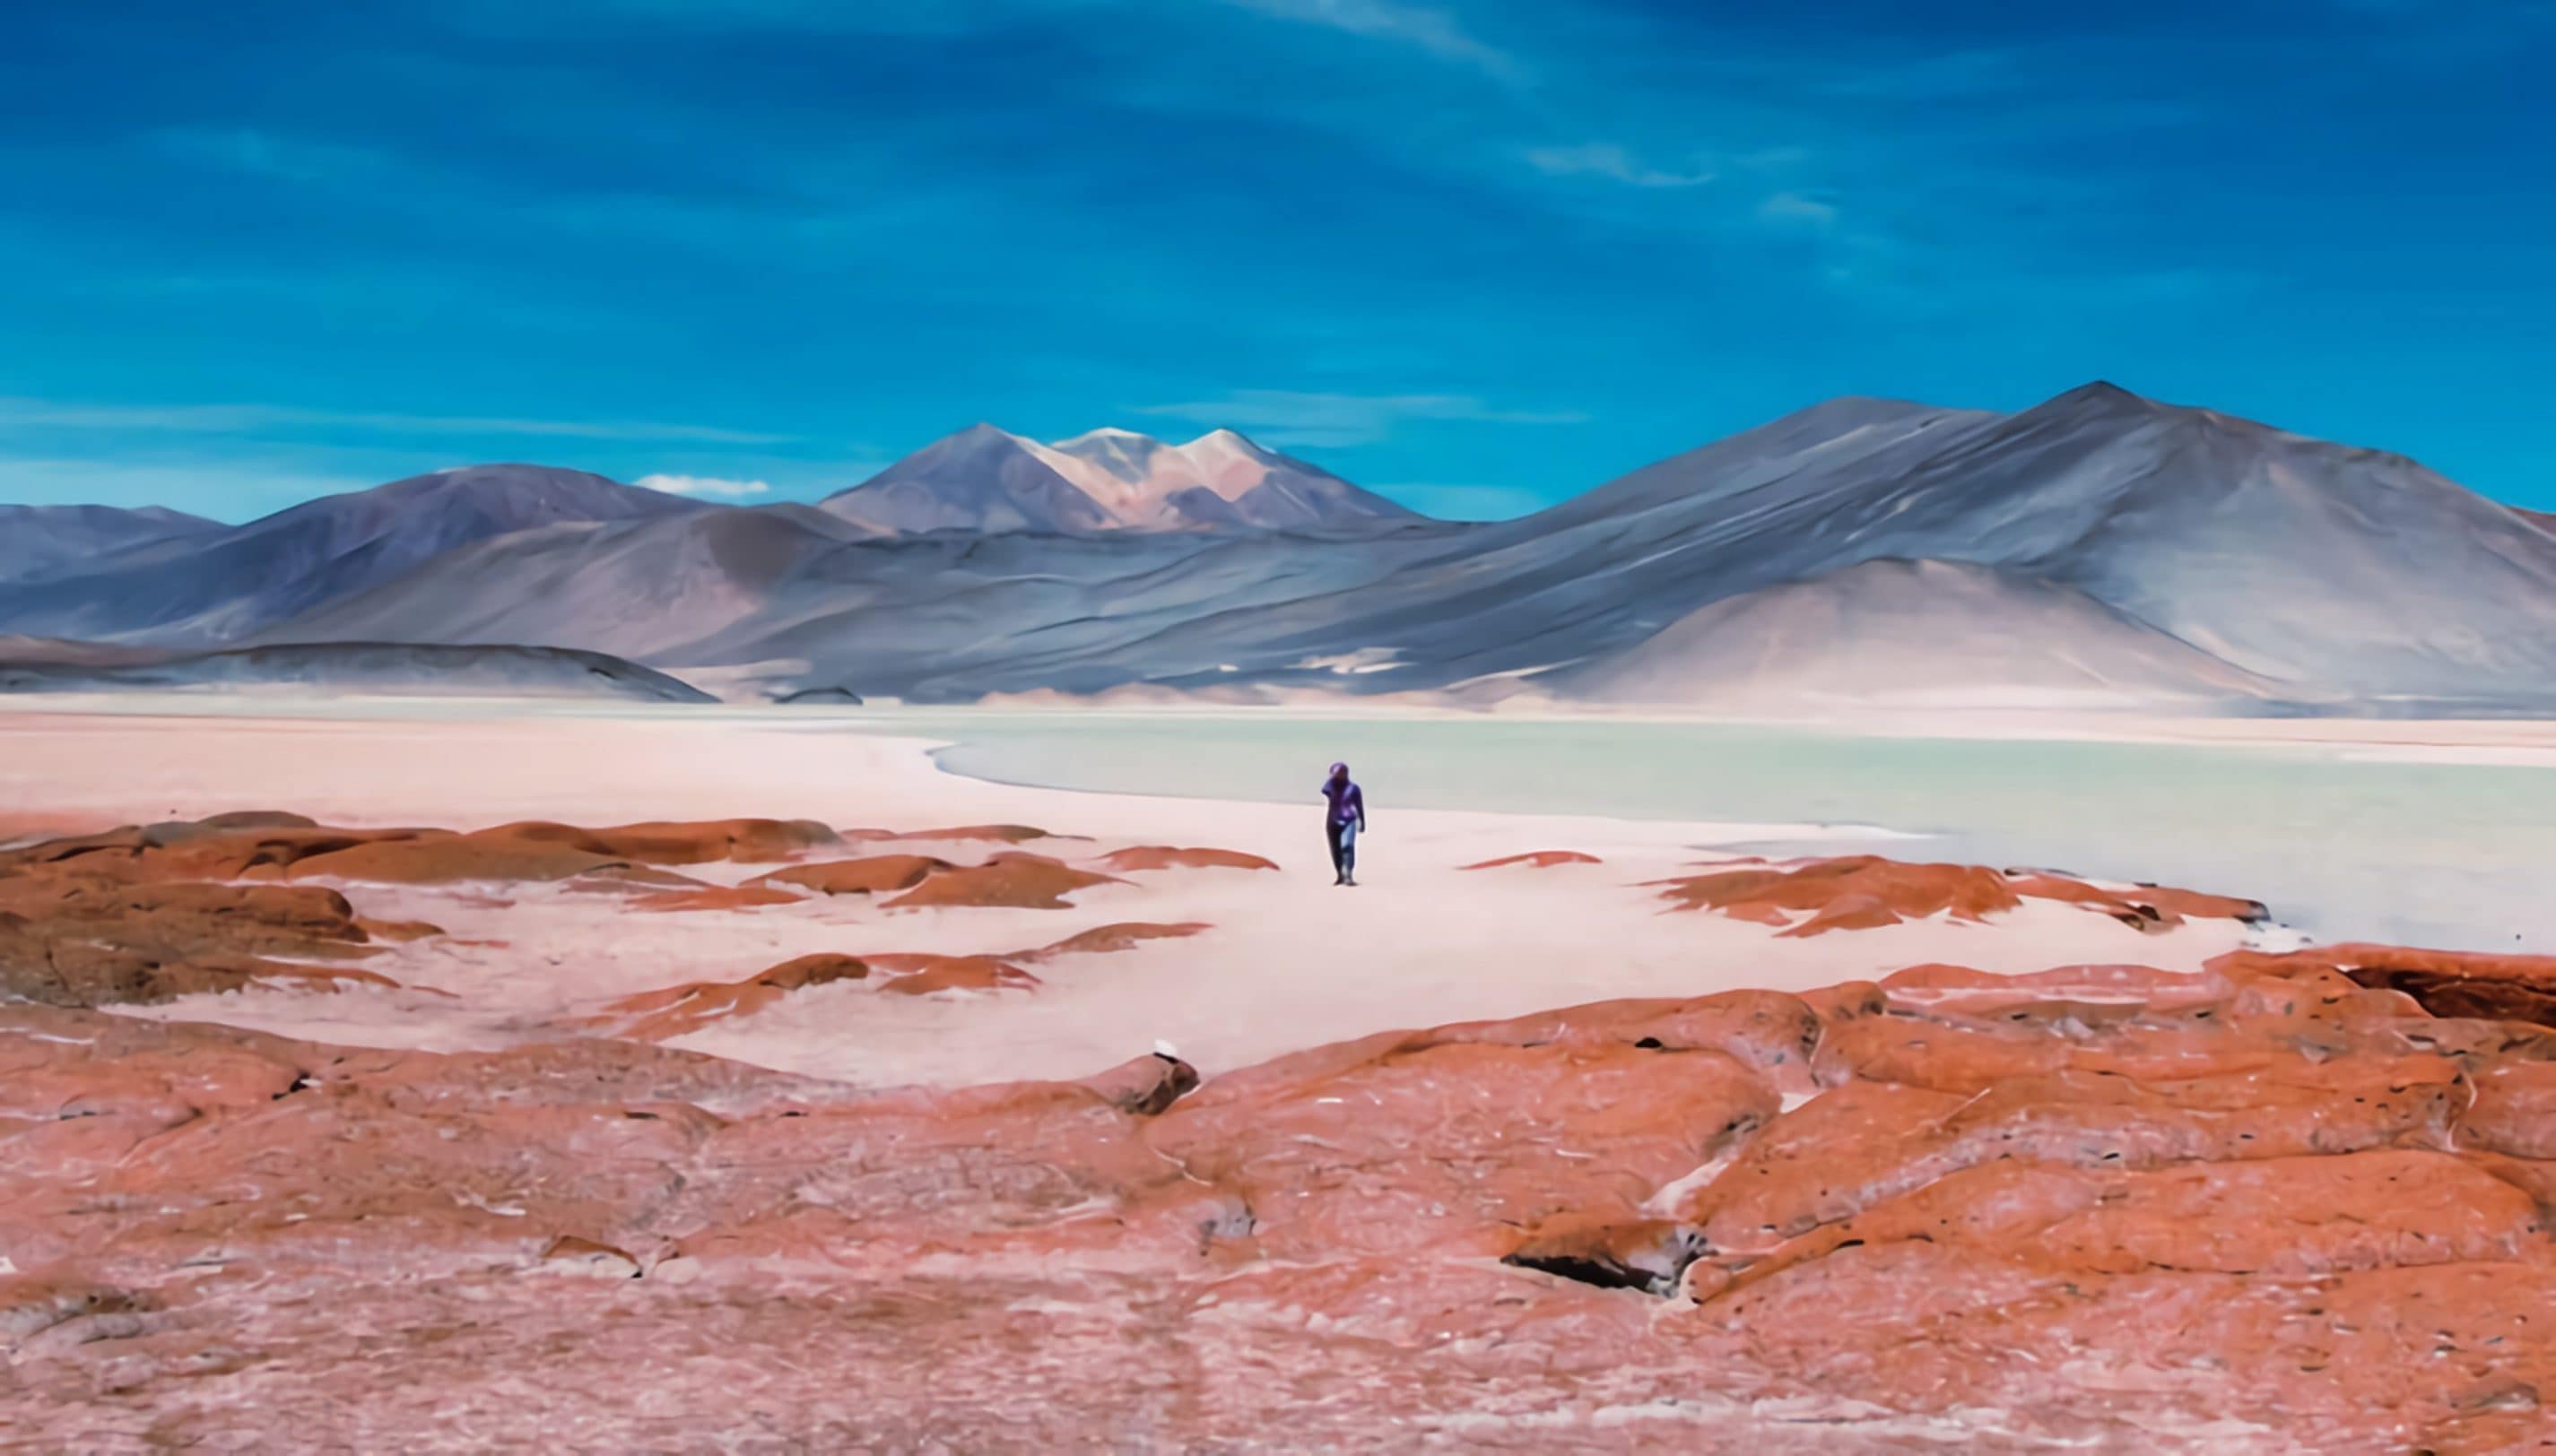 Deserto do Atacama - o lugar mais seco da Terra